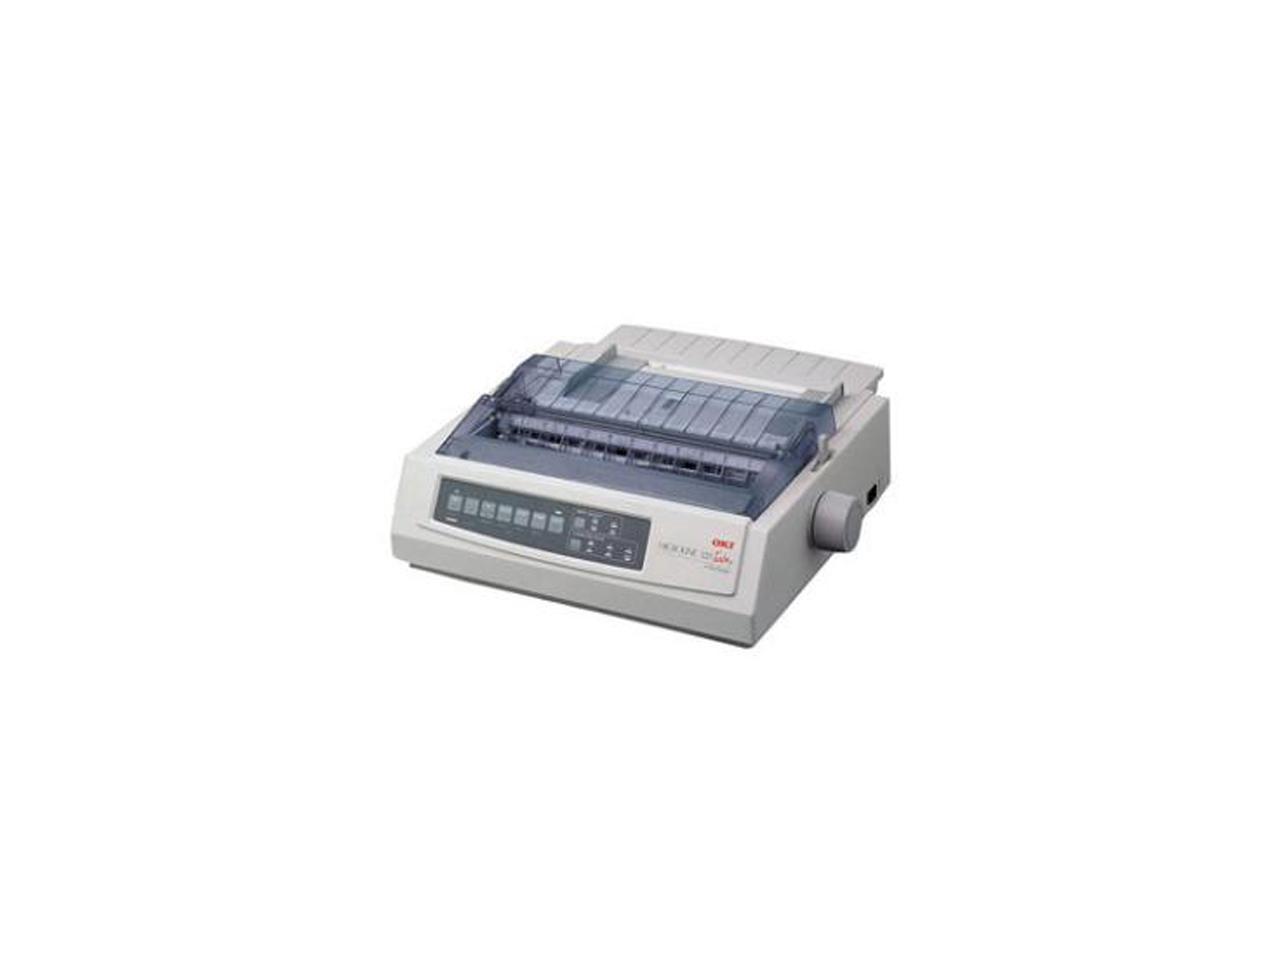 OKIDATA MICROLINE 320 Turbo 62411601 240 x 216 dpi 9 pins Dot Matrix Printer